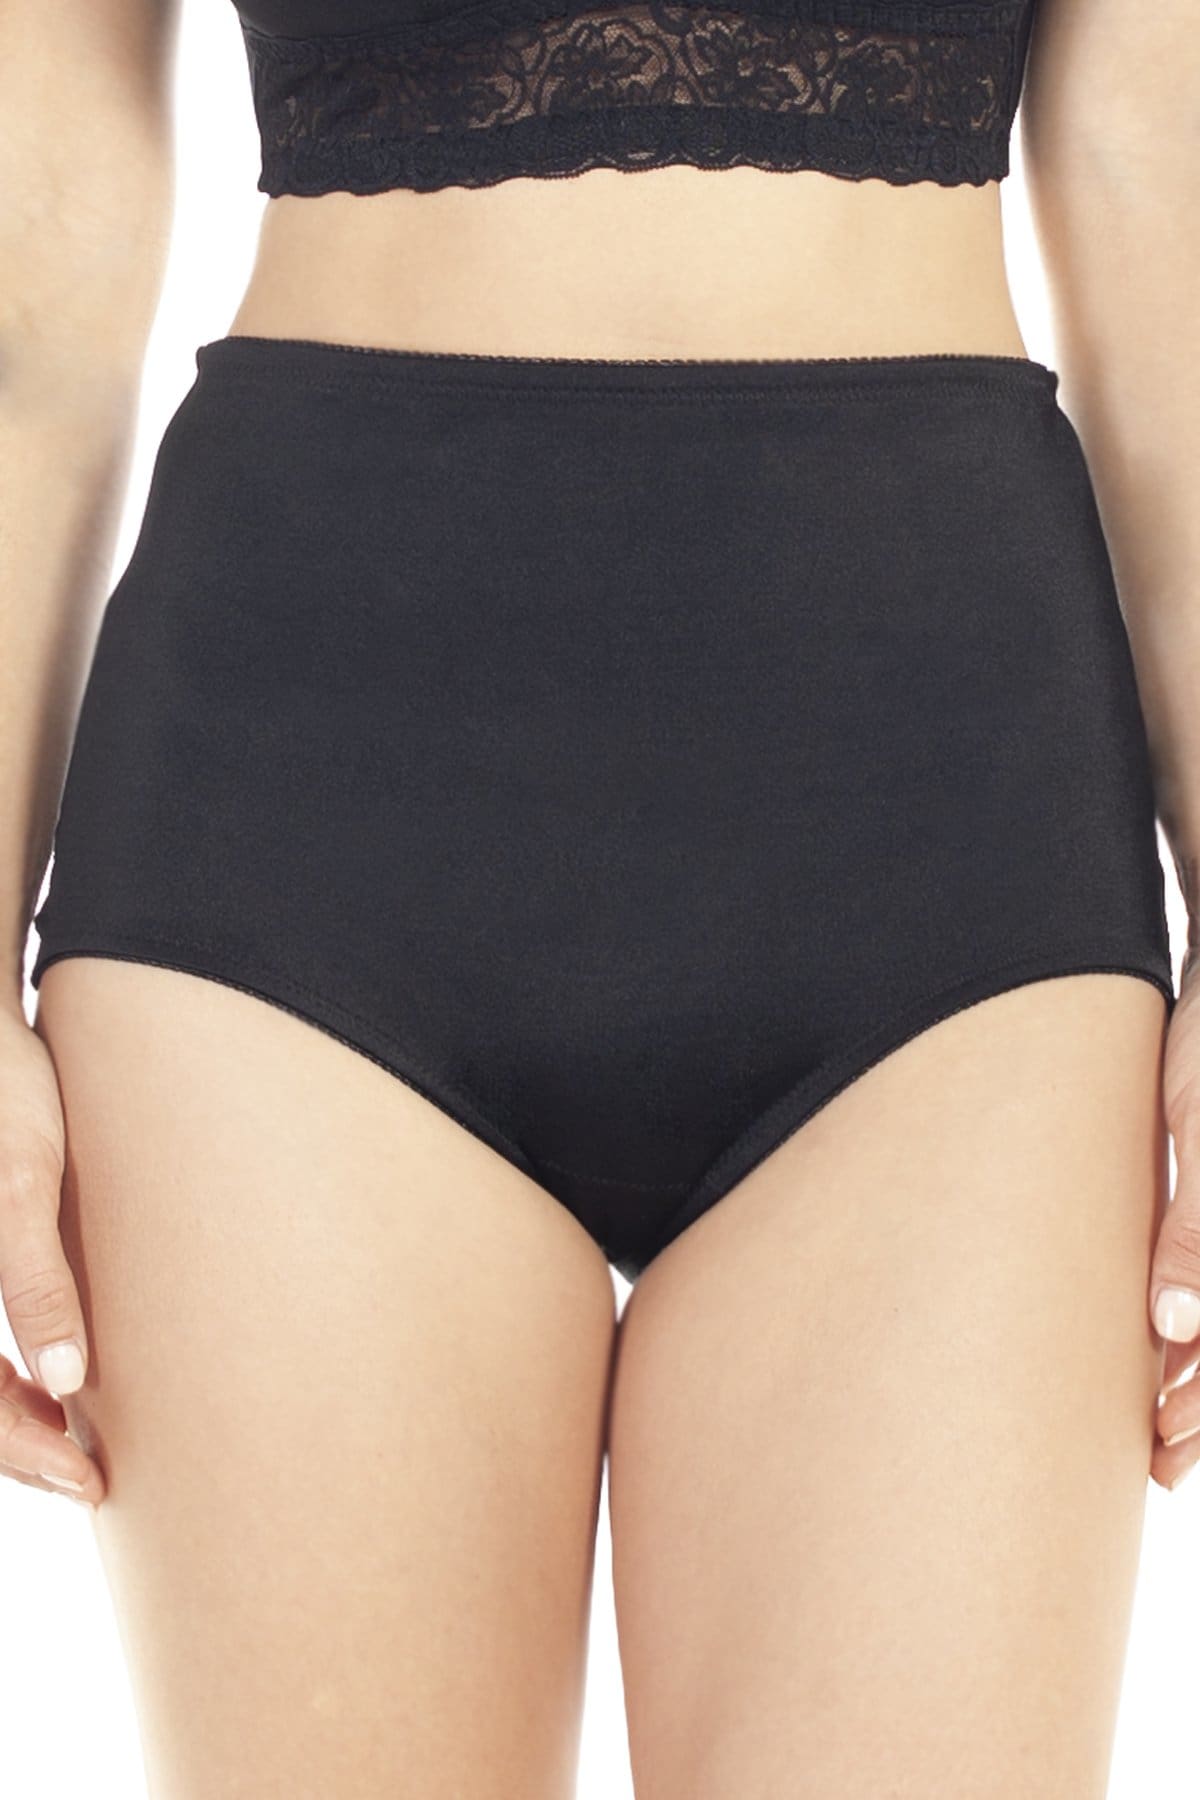 Rhonda Shear Lace Underwear briefs Gray size XL - beyond exchange